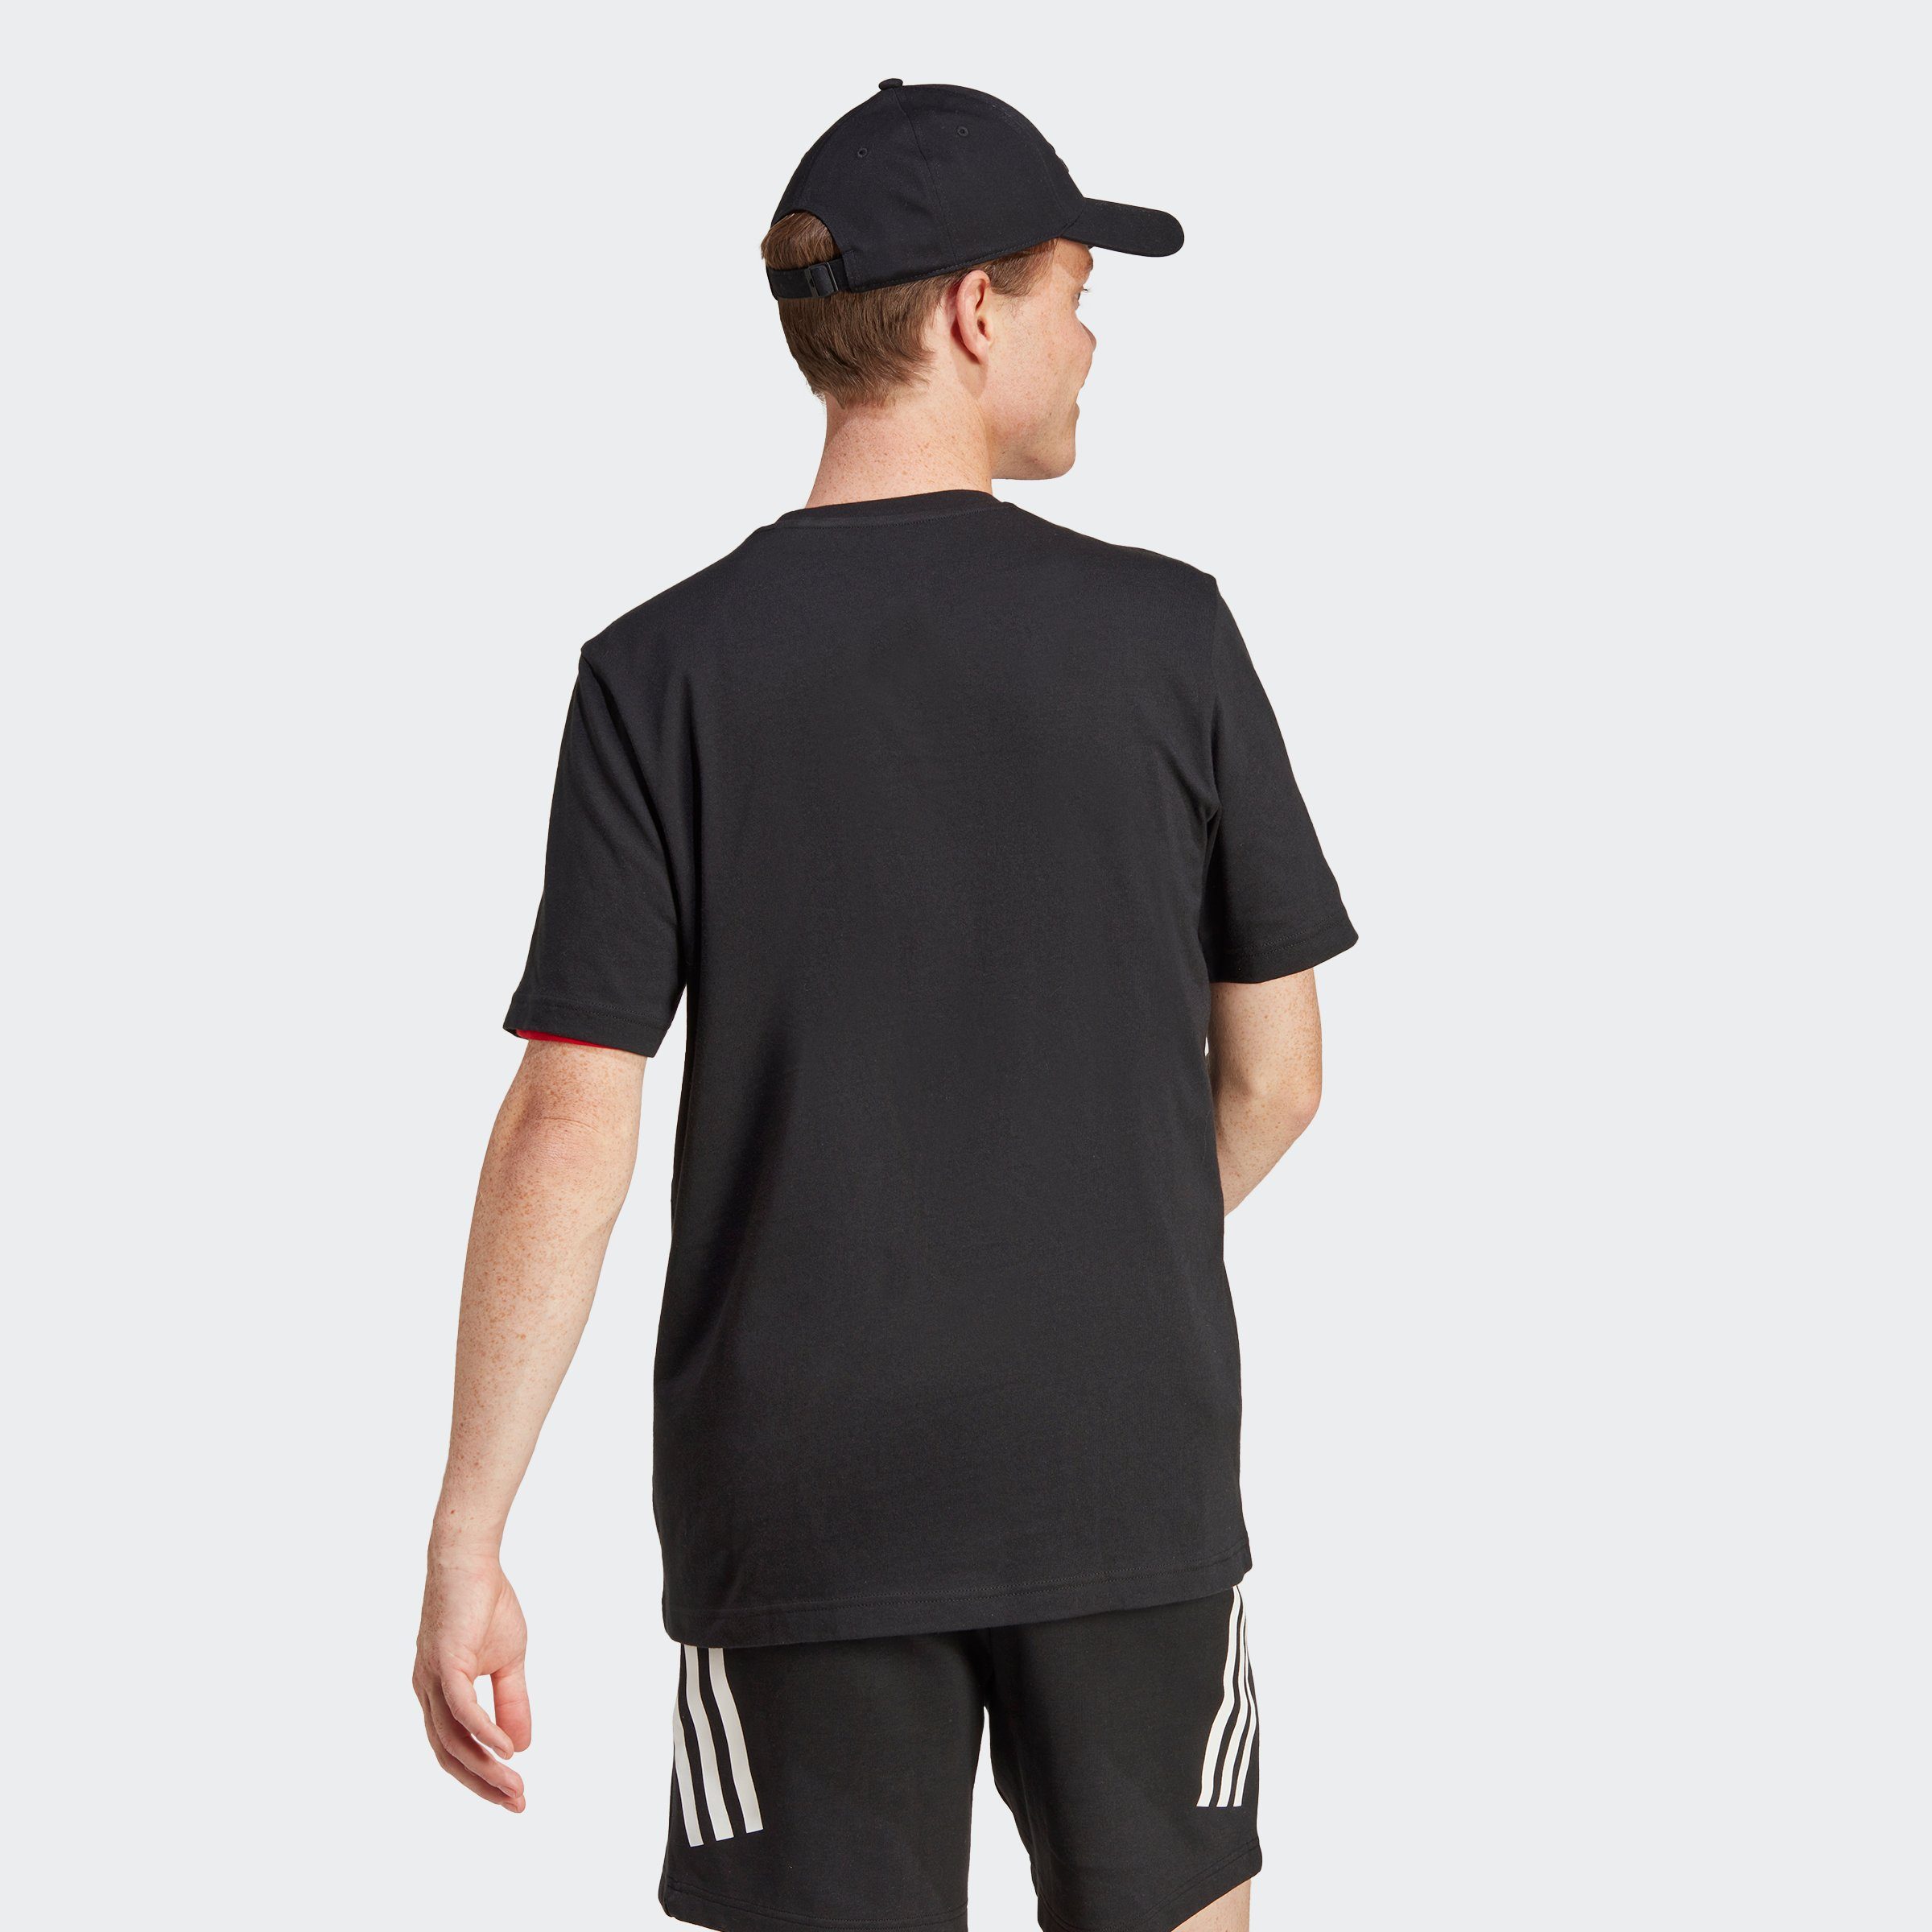 T-Shirt BER adidas M BLACK GT Sportswear